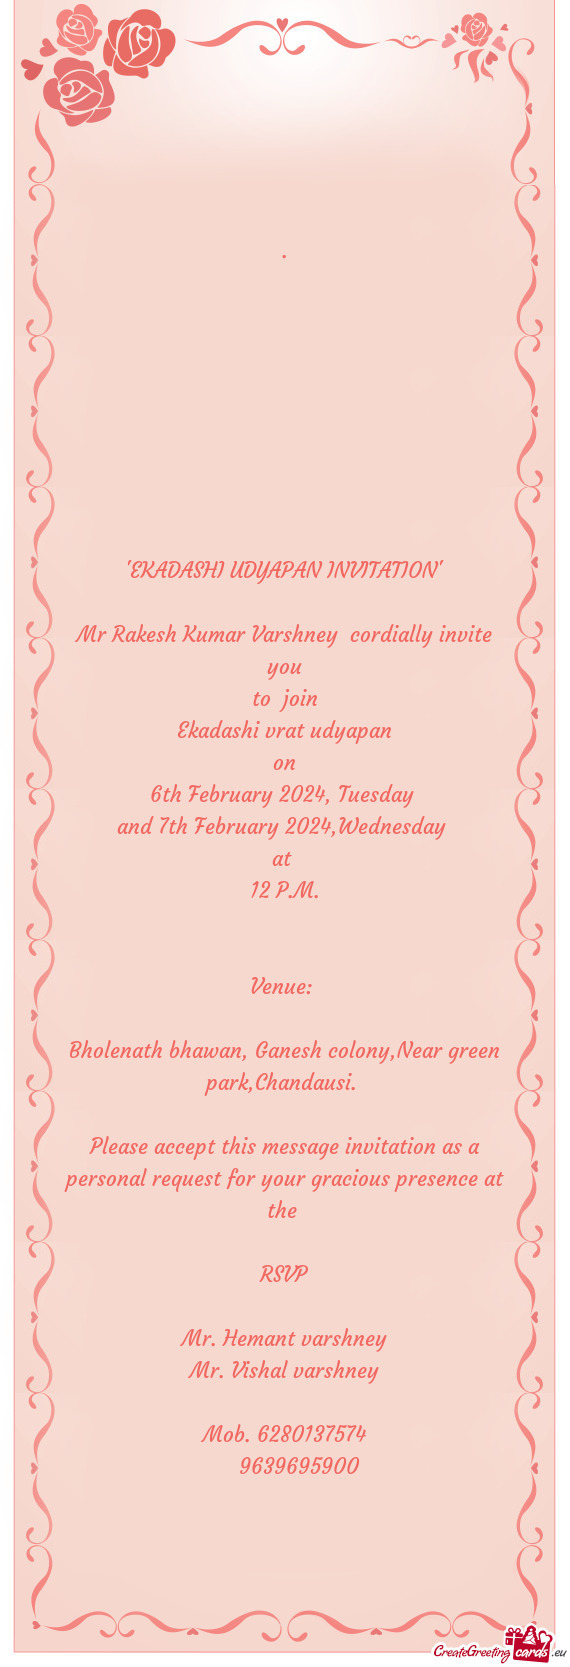 Mr Rakesh Kumar Varshney cordially invite you